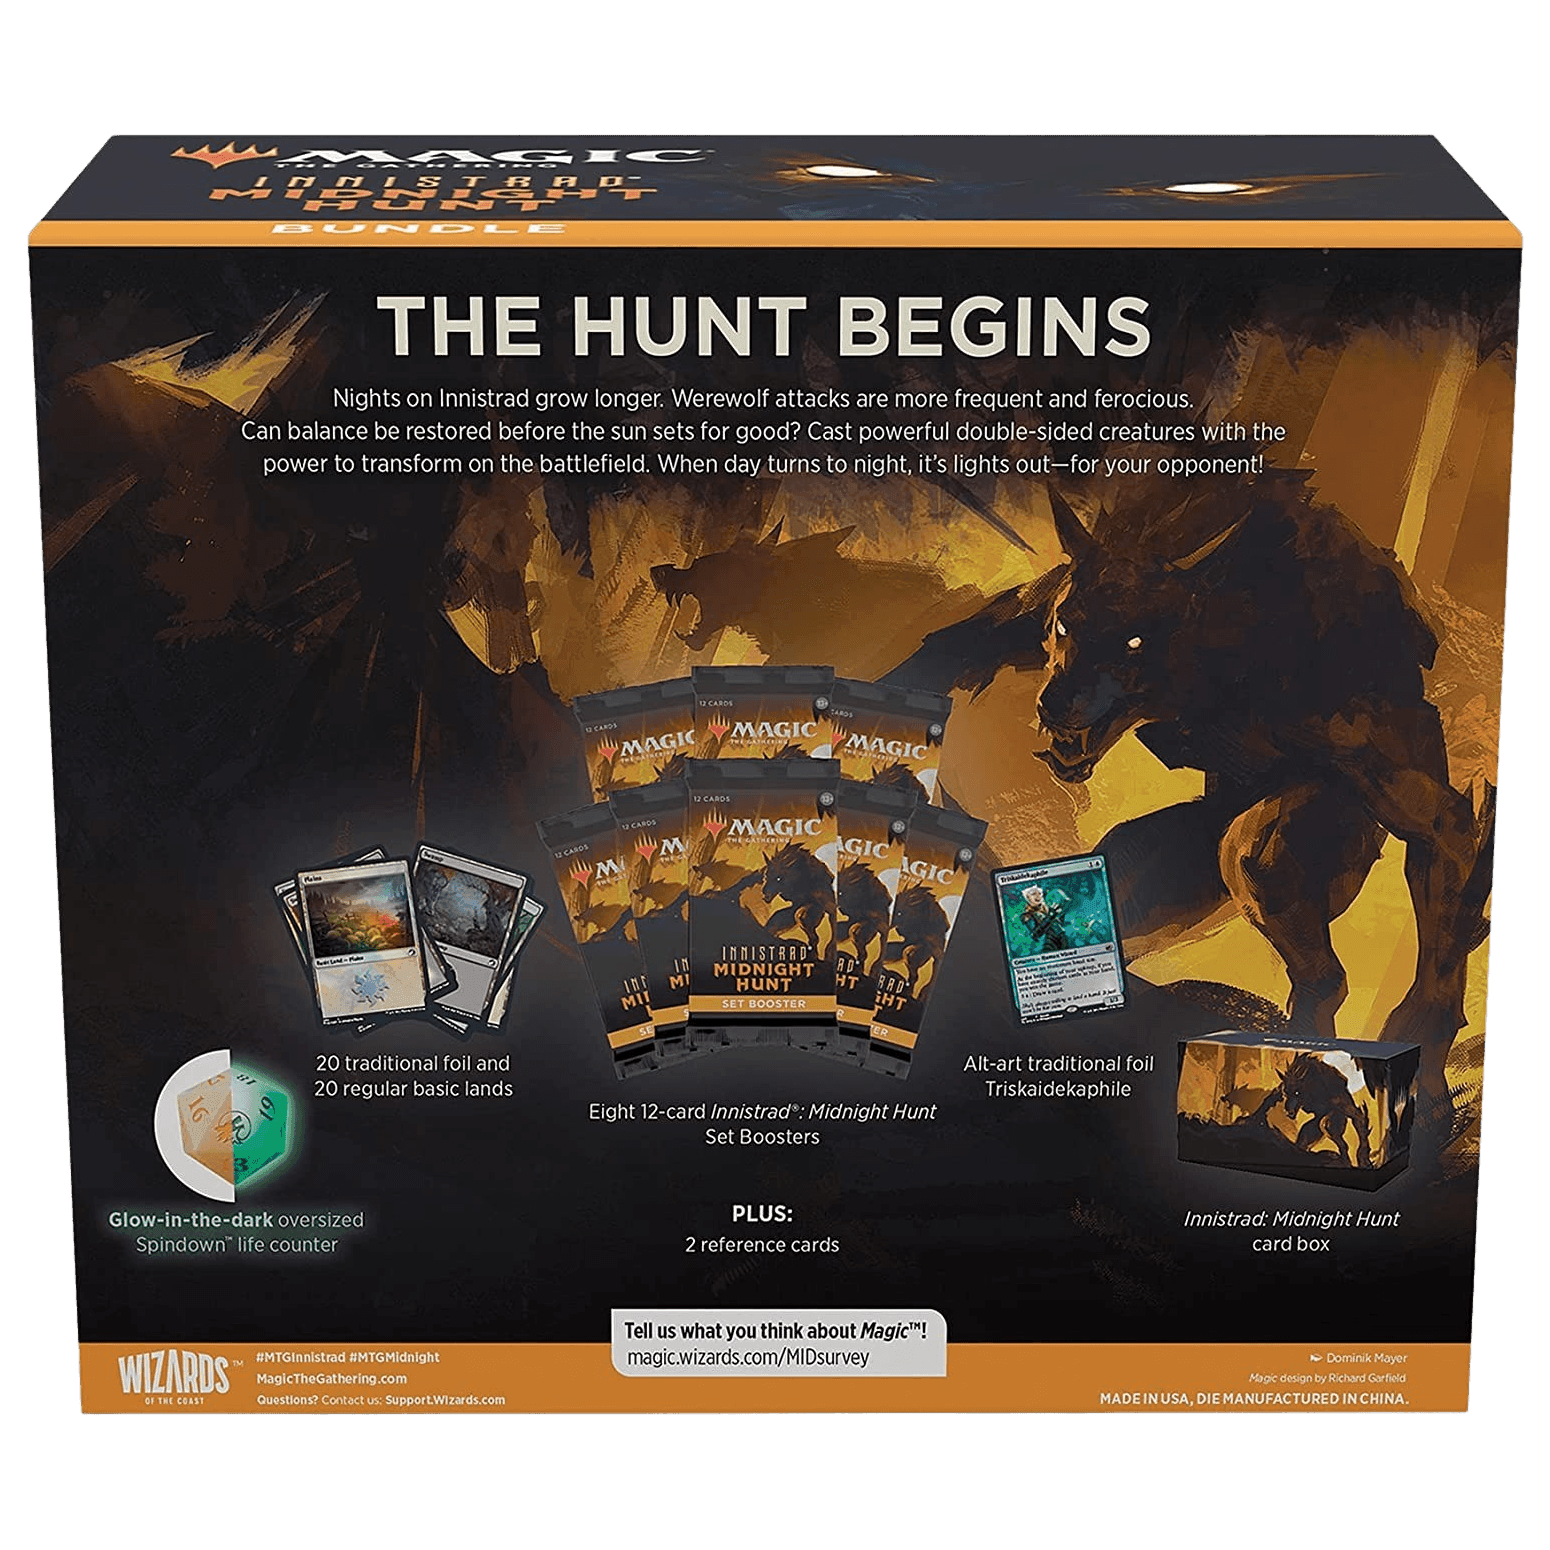 Magic: The Gathering - Innistrad: Midnight Hunt Bundle - The Card Vault